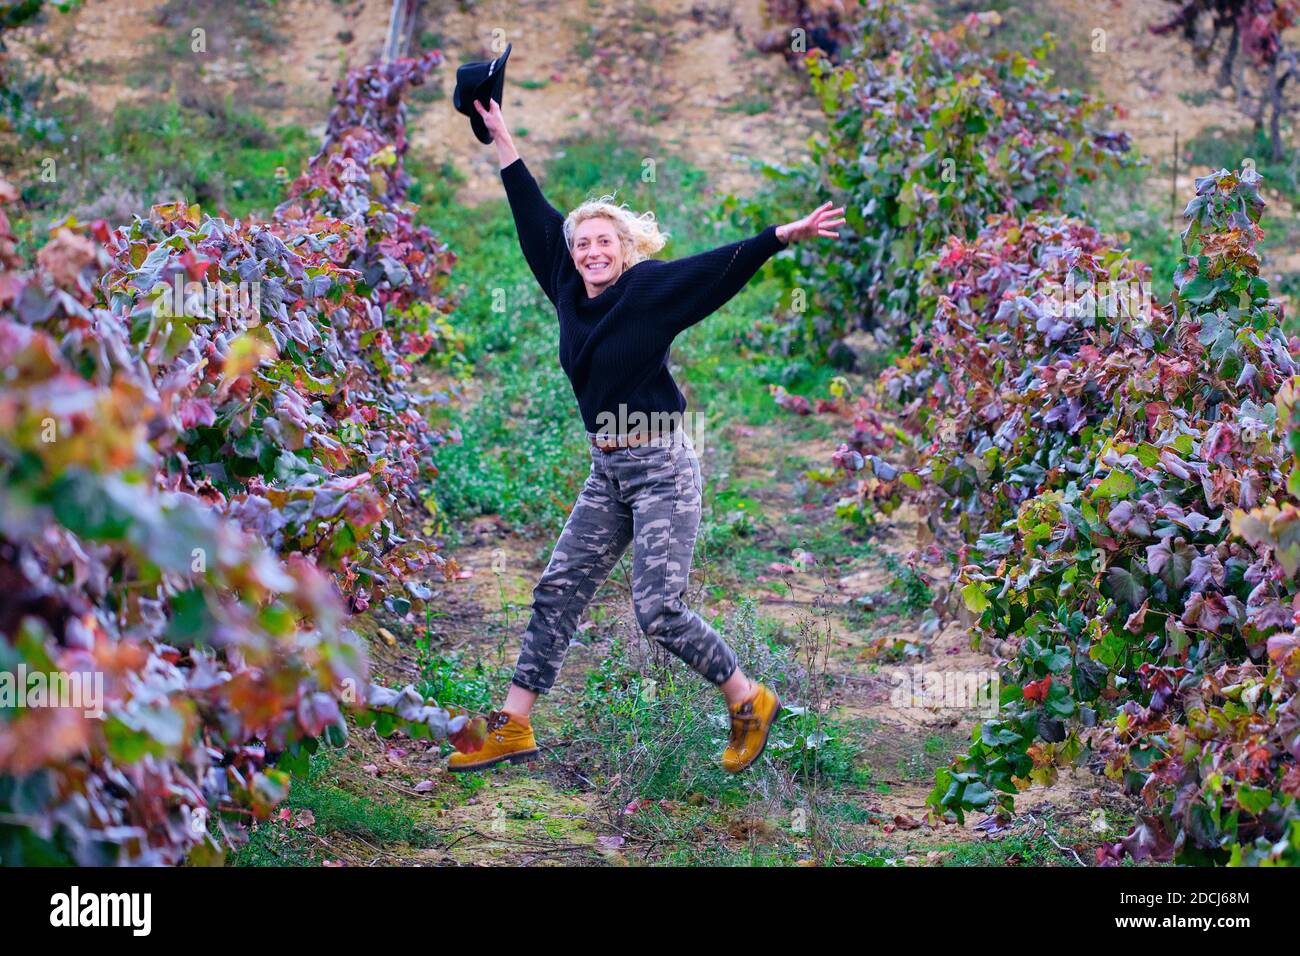 Joyful mature young blondy farmer woman jumping in a vineyard farmland. Stock Photo